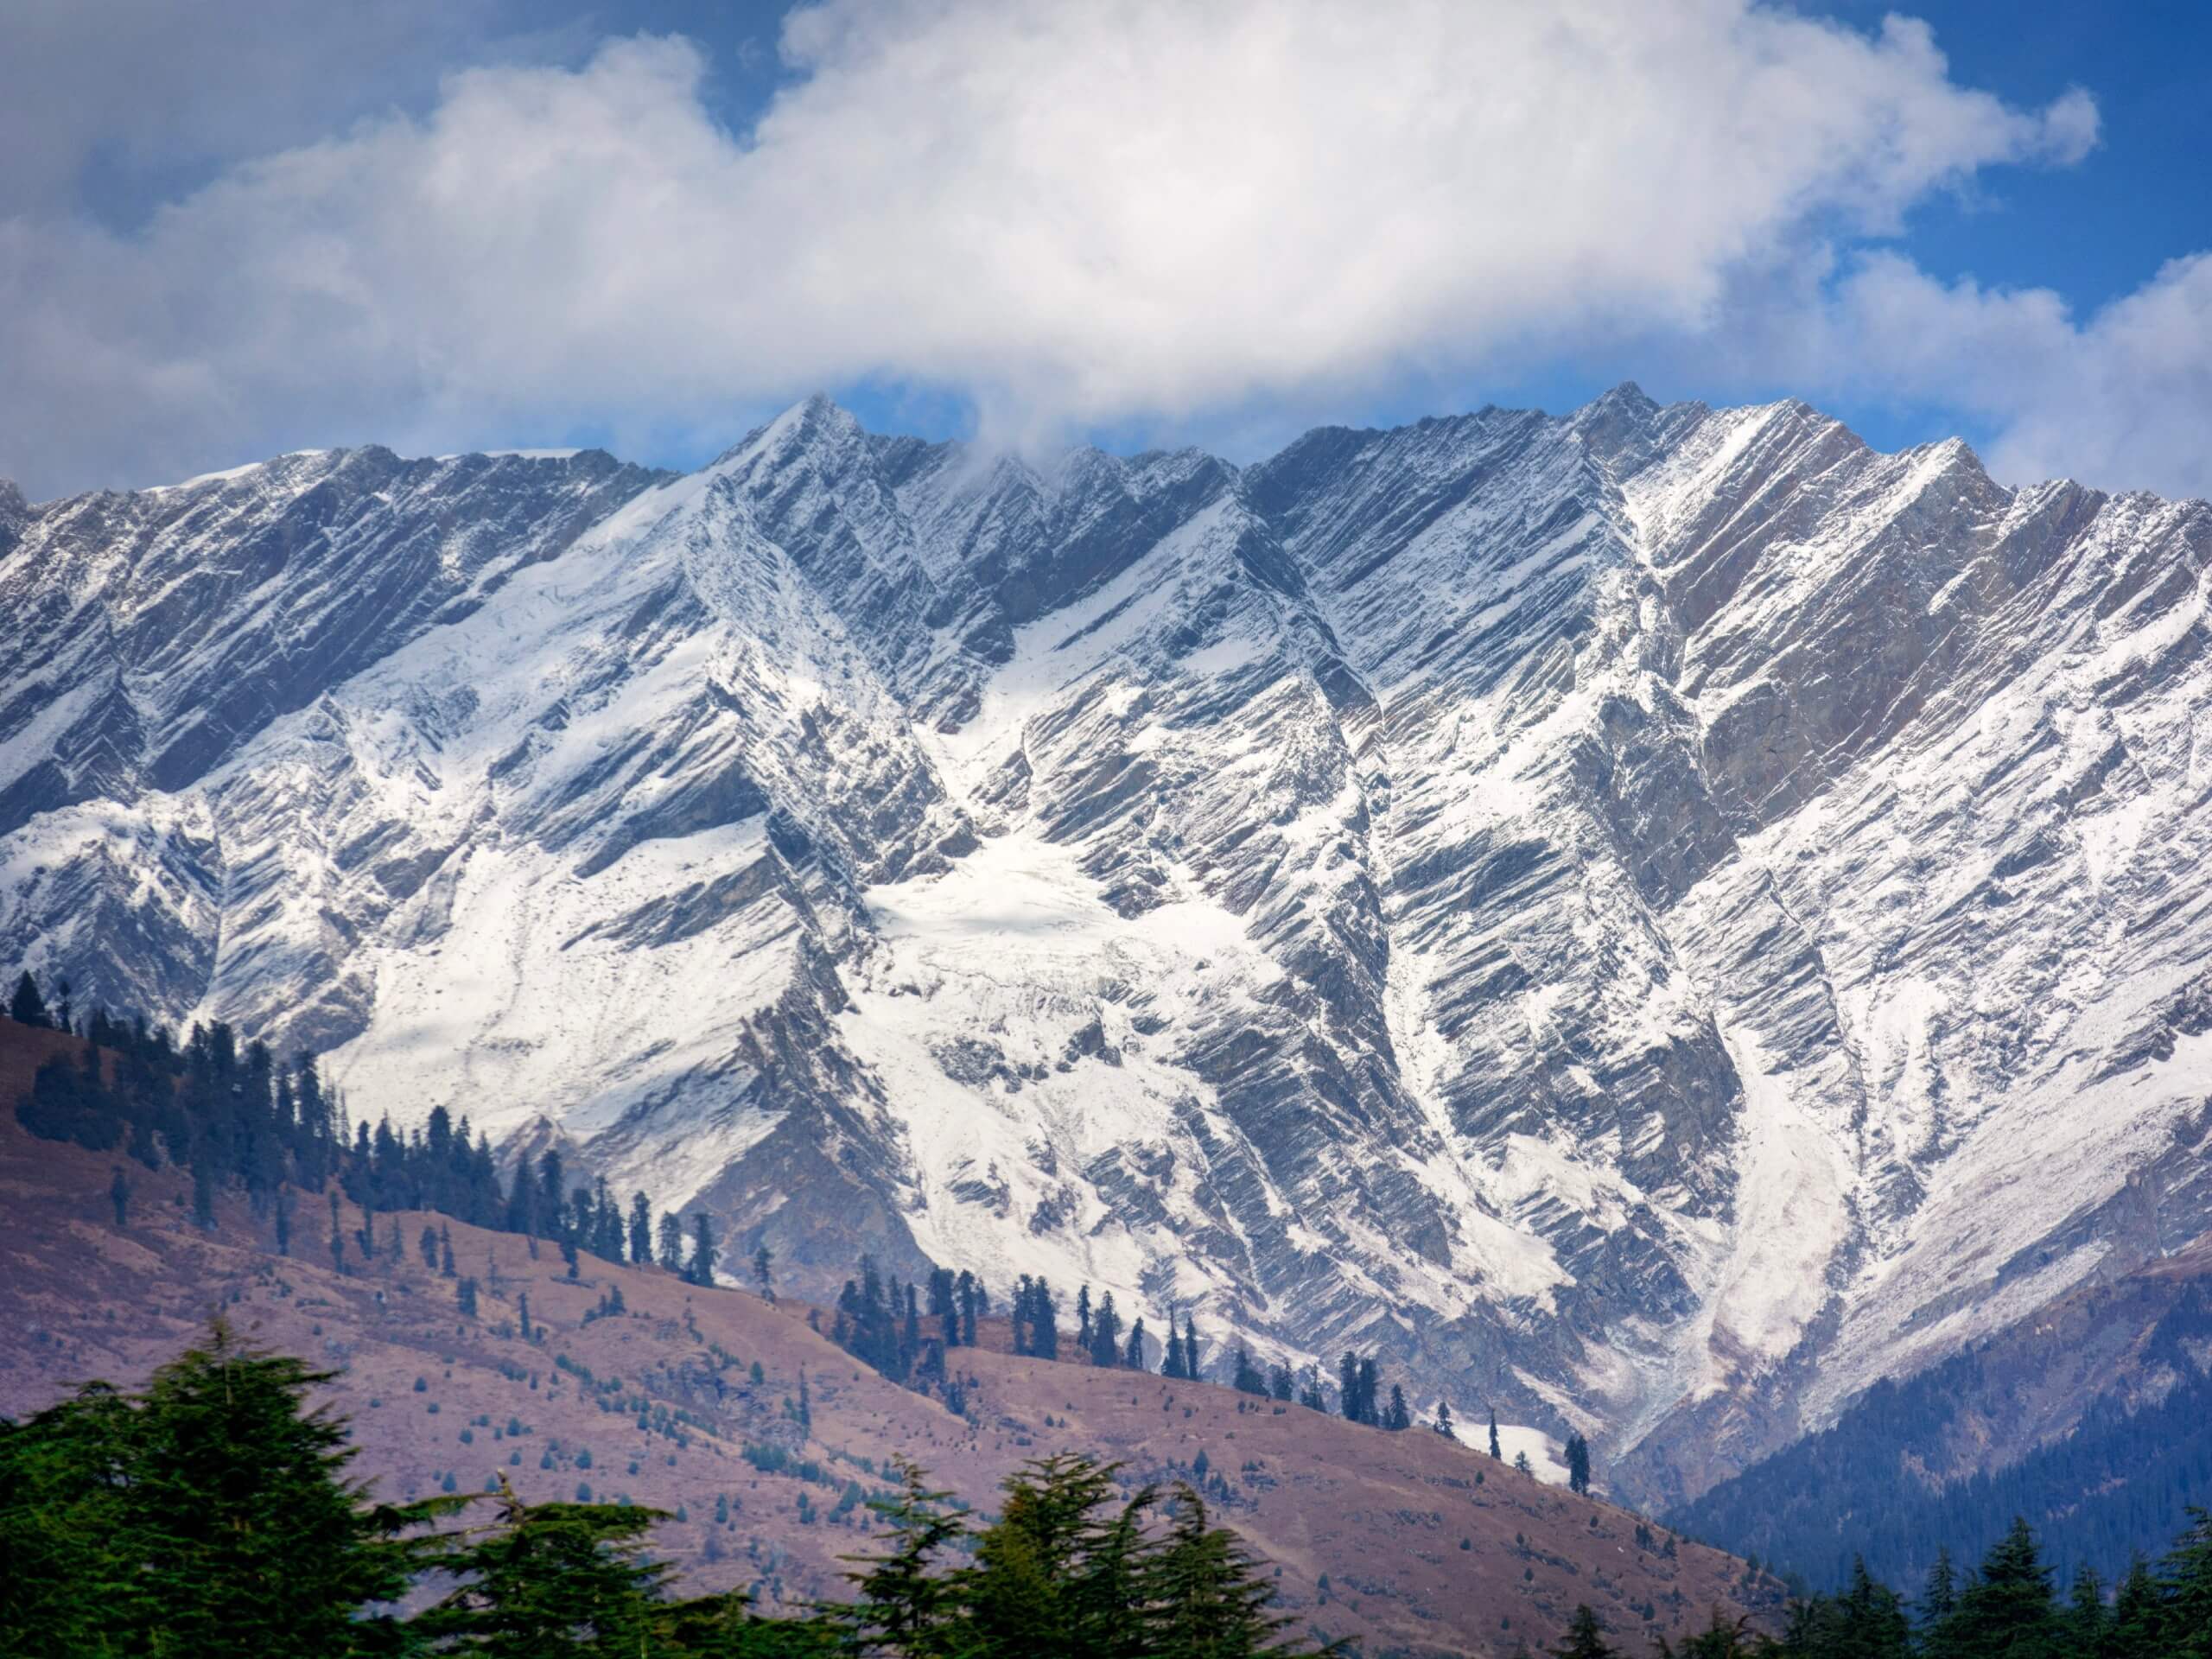 Himalayan mountain views near Manali